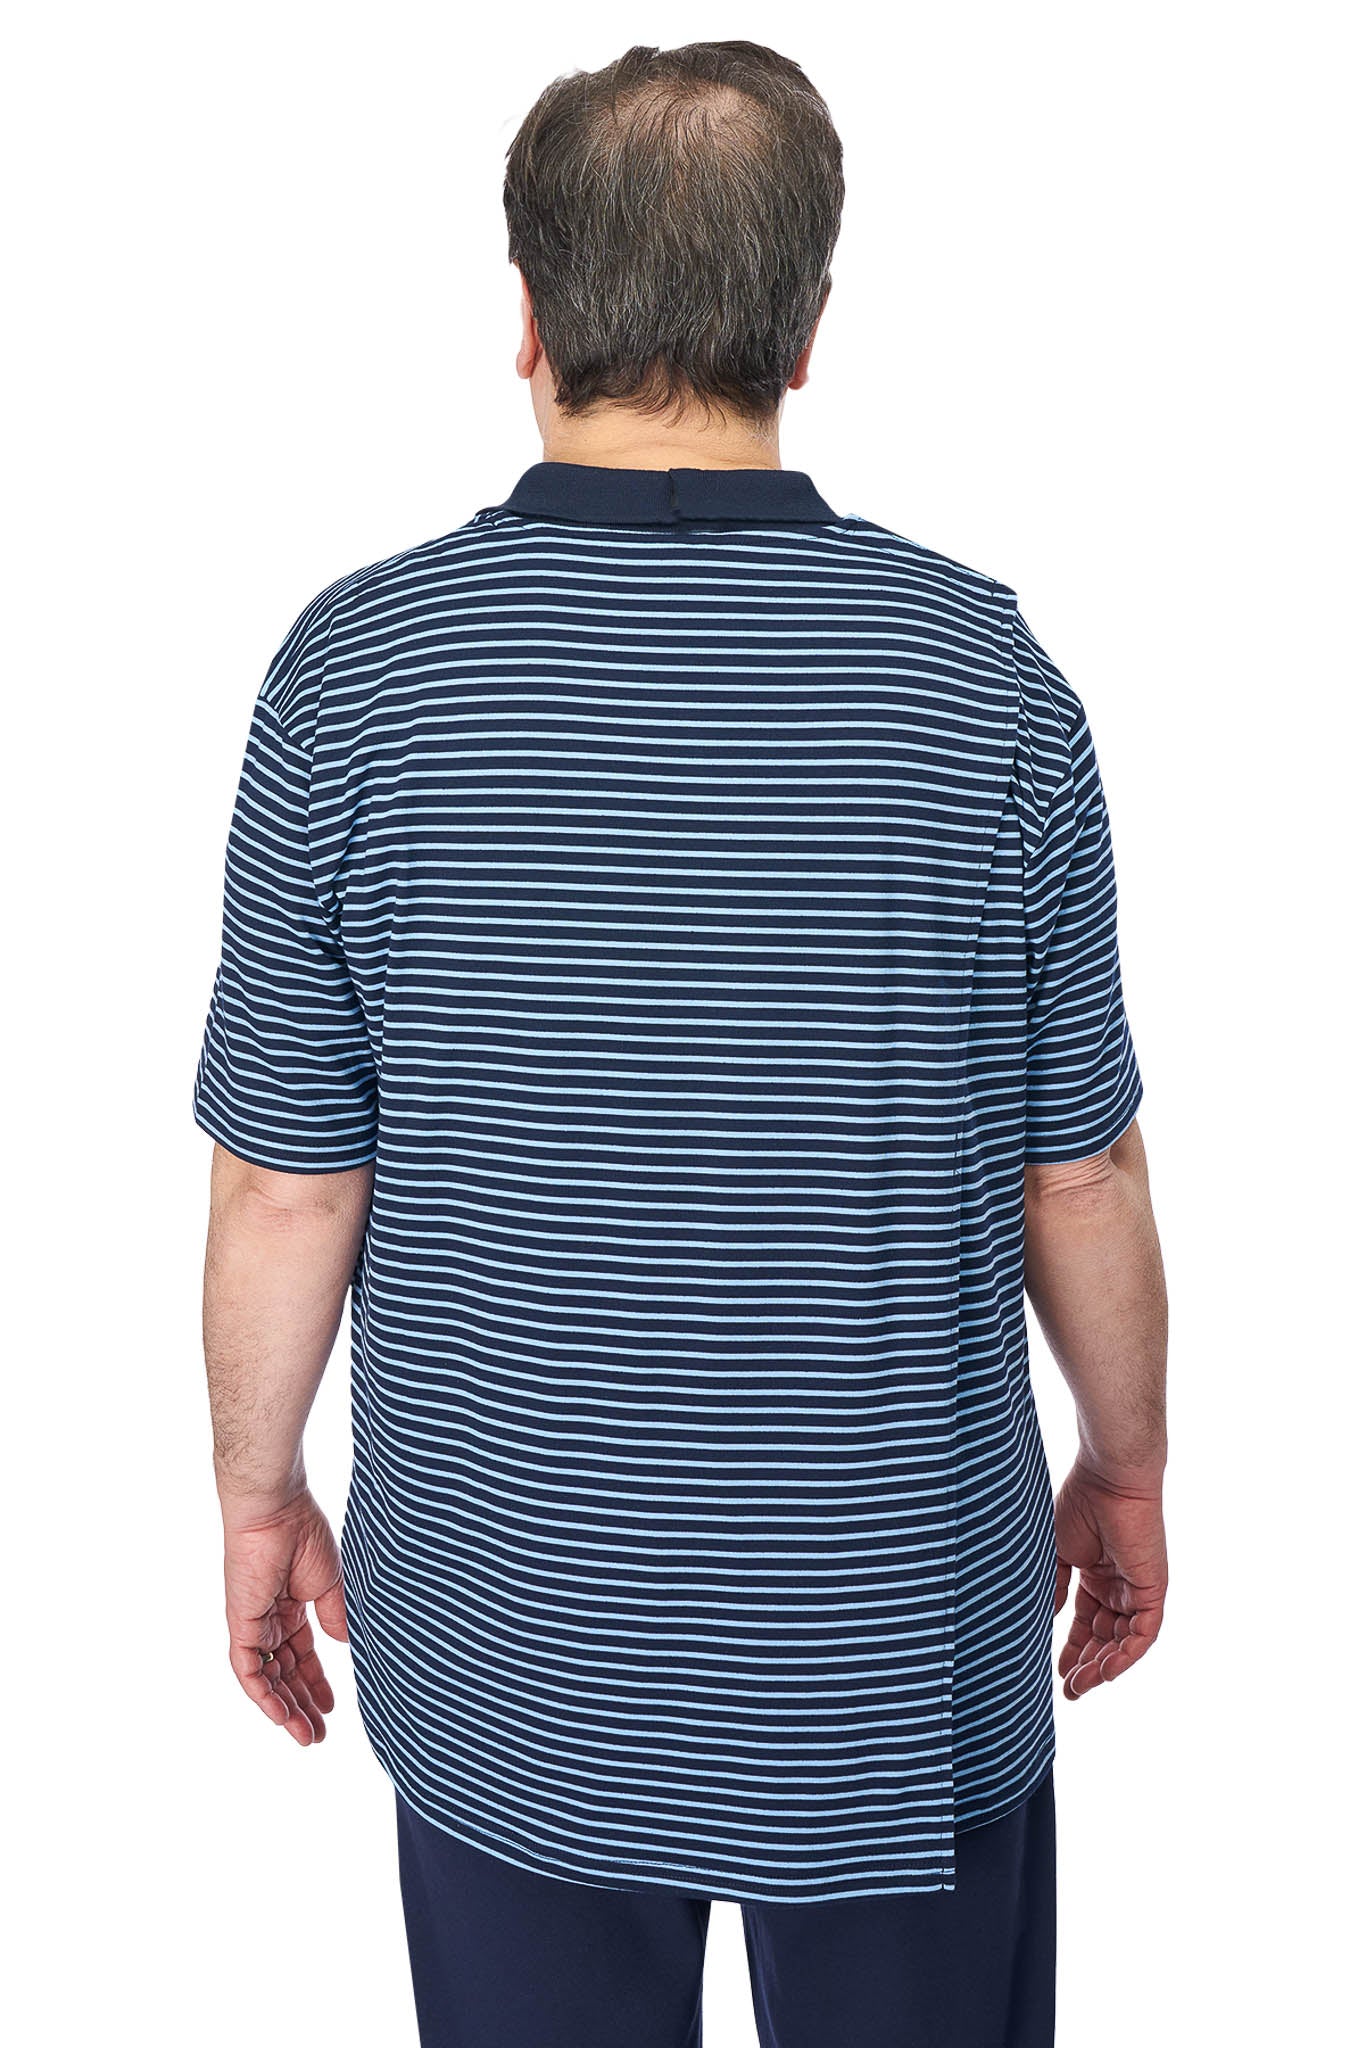 Adaptive Polo Shirt - Ralfie | Blue Stripes